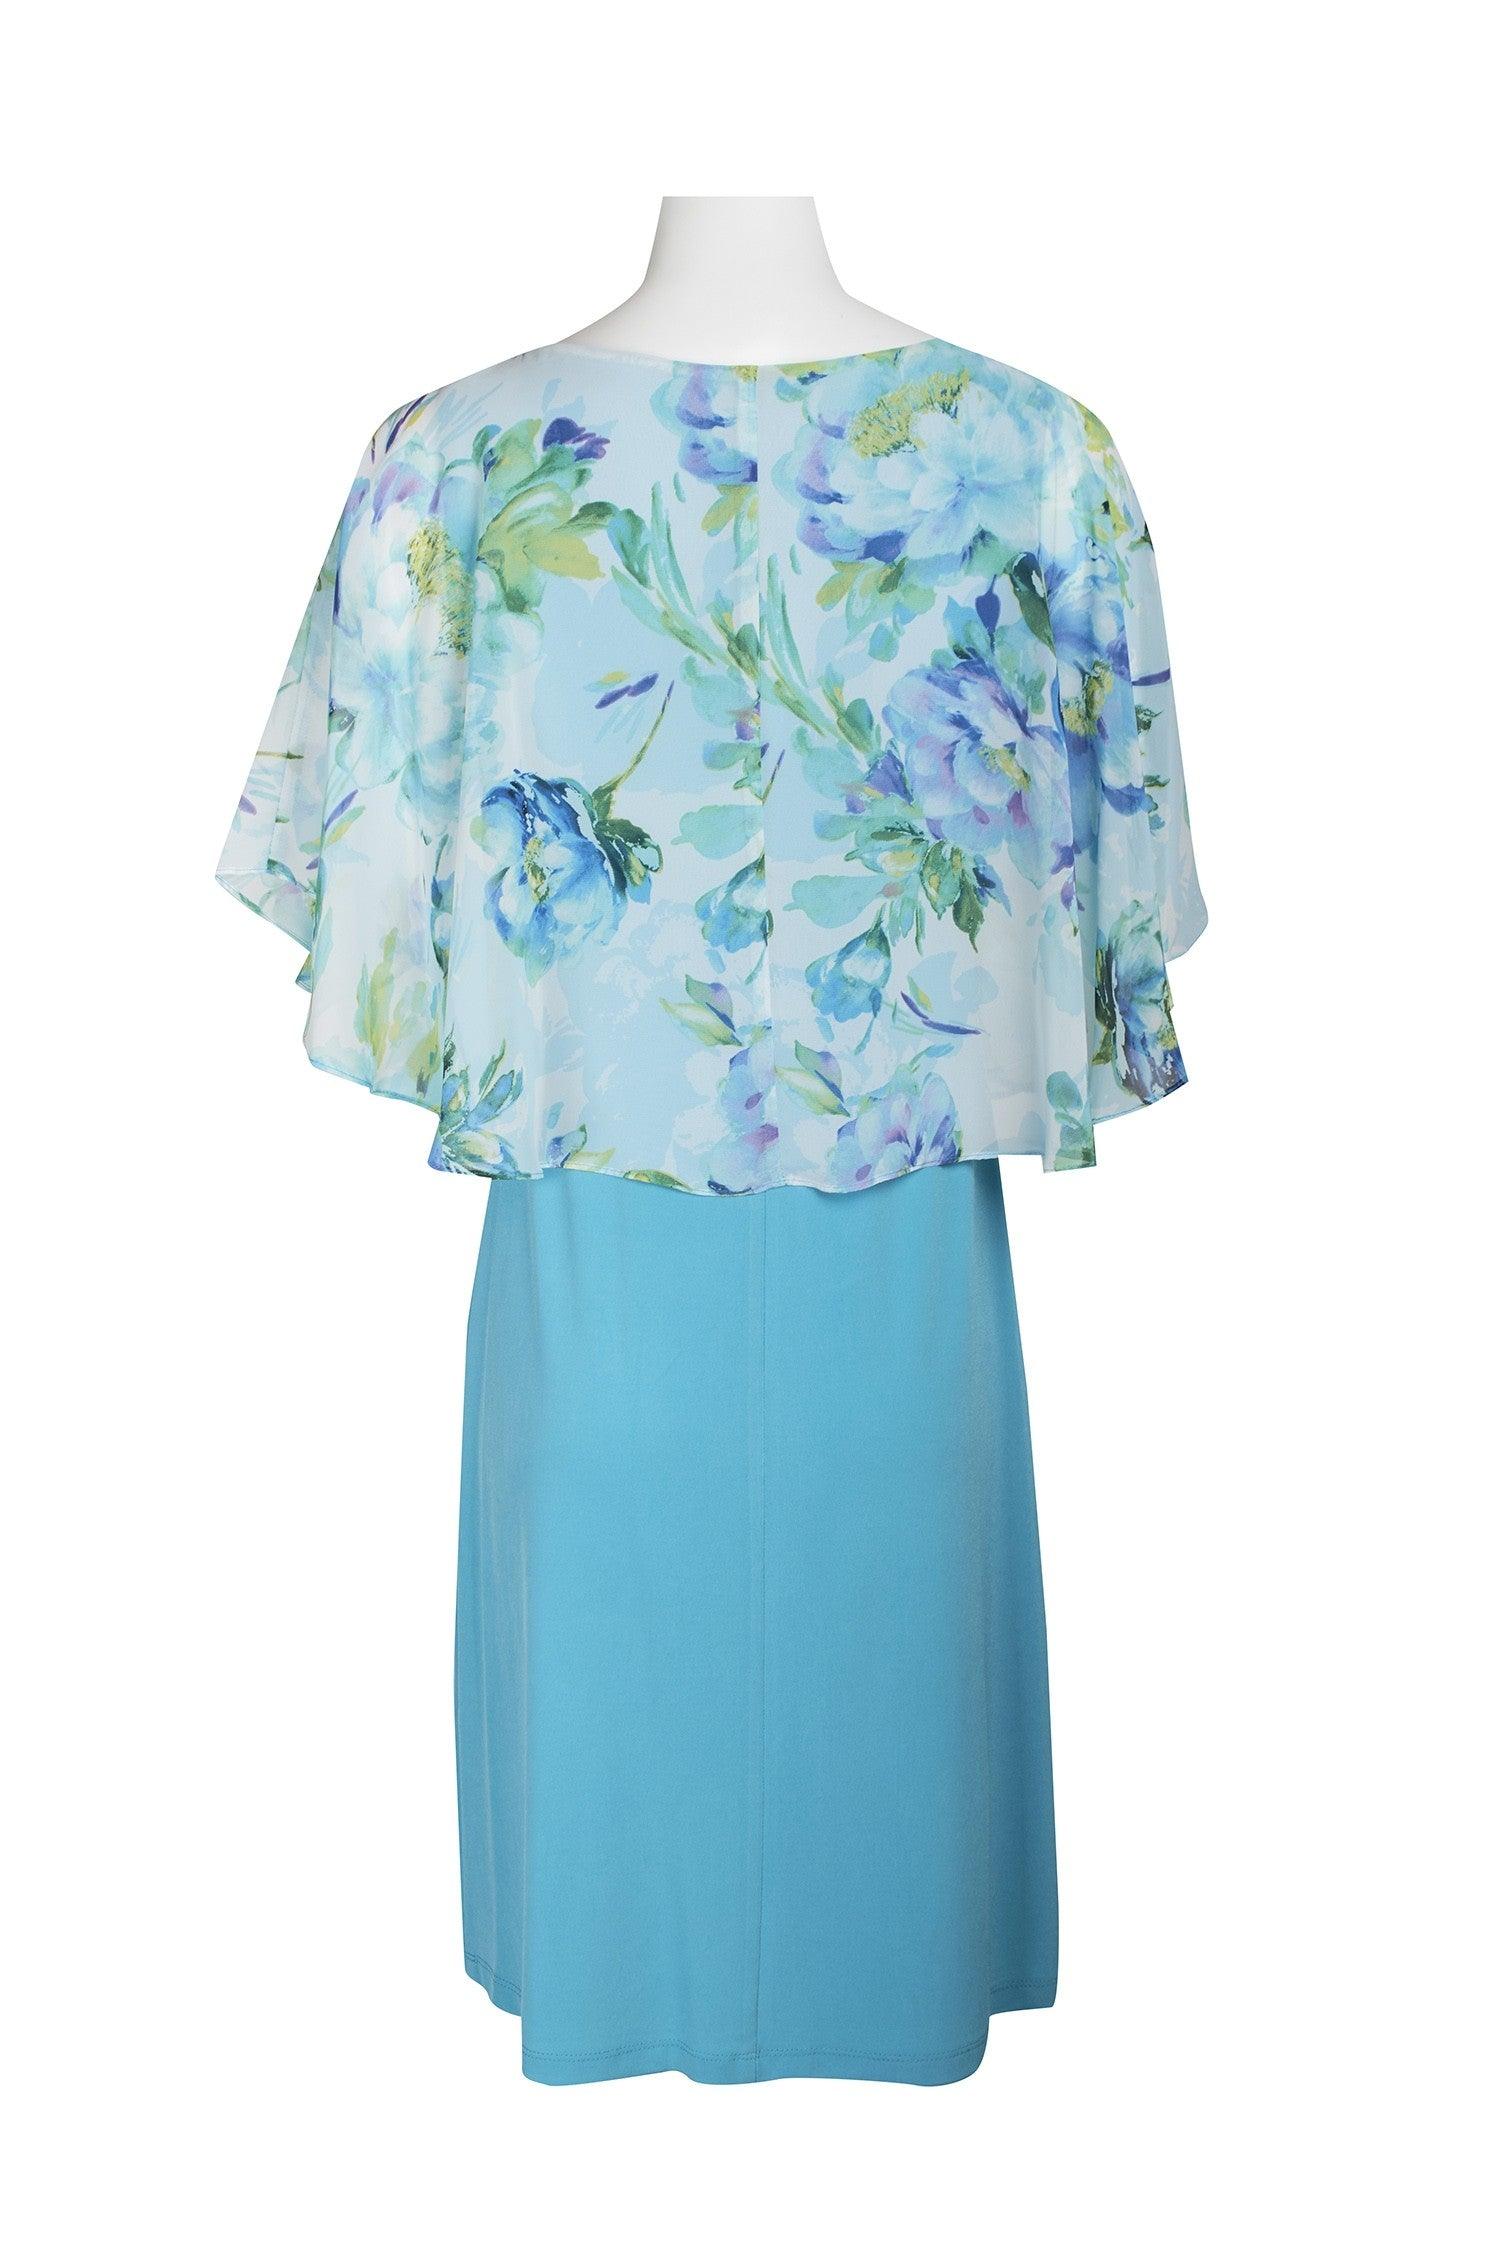 Connected Apparel Short Floral Chiffon Cape Dress - The Dress Outlet